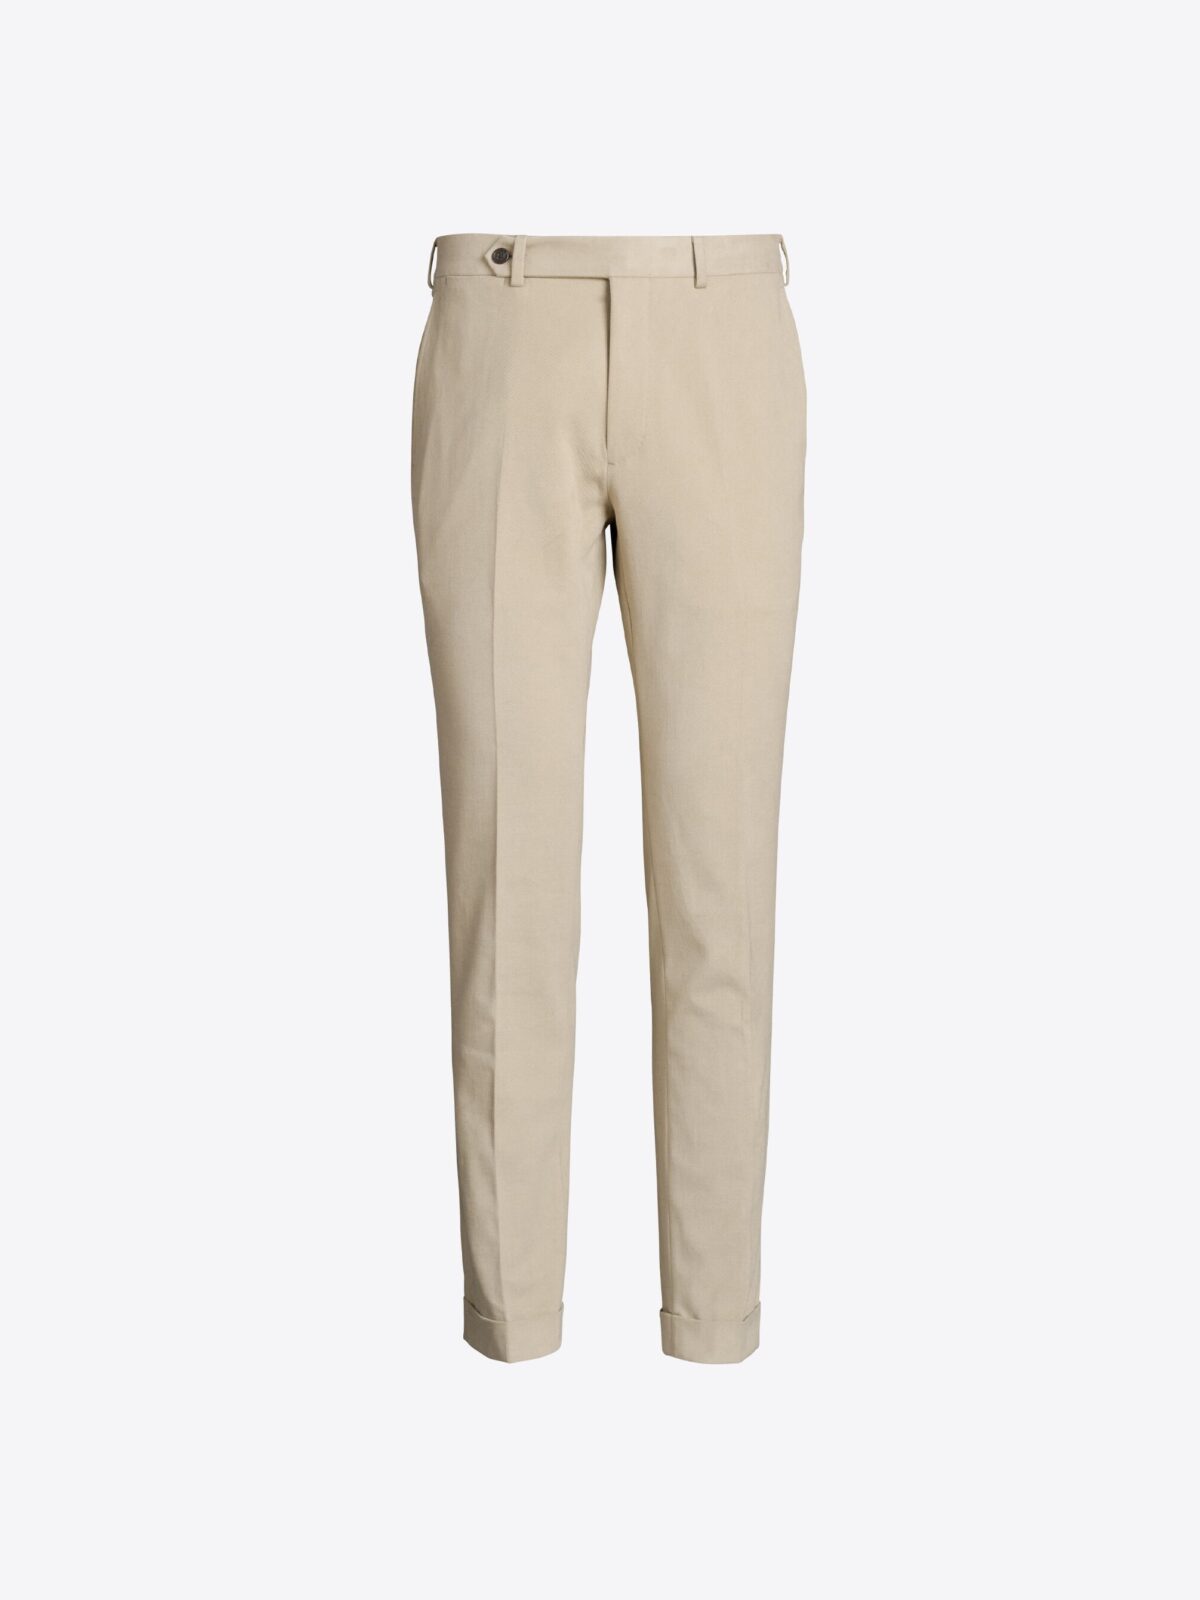 Sondrio - Light Brown - Stretch - Brushed Twill Trouser | SPIER & MACKAY